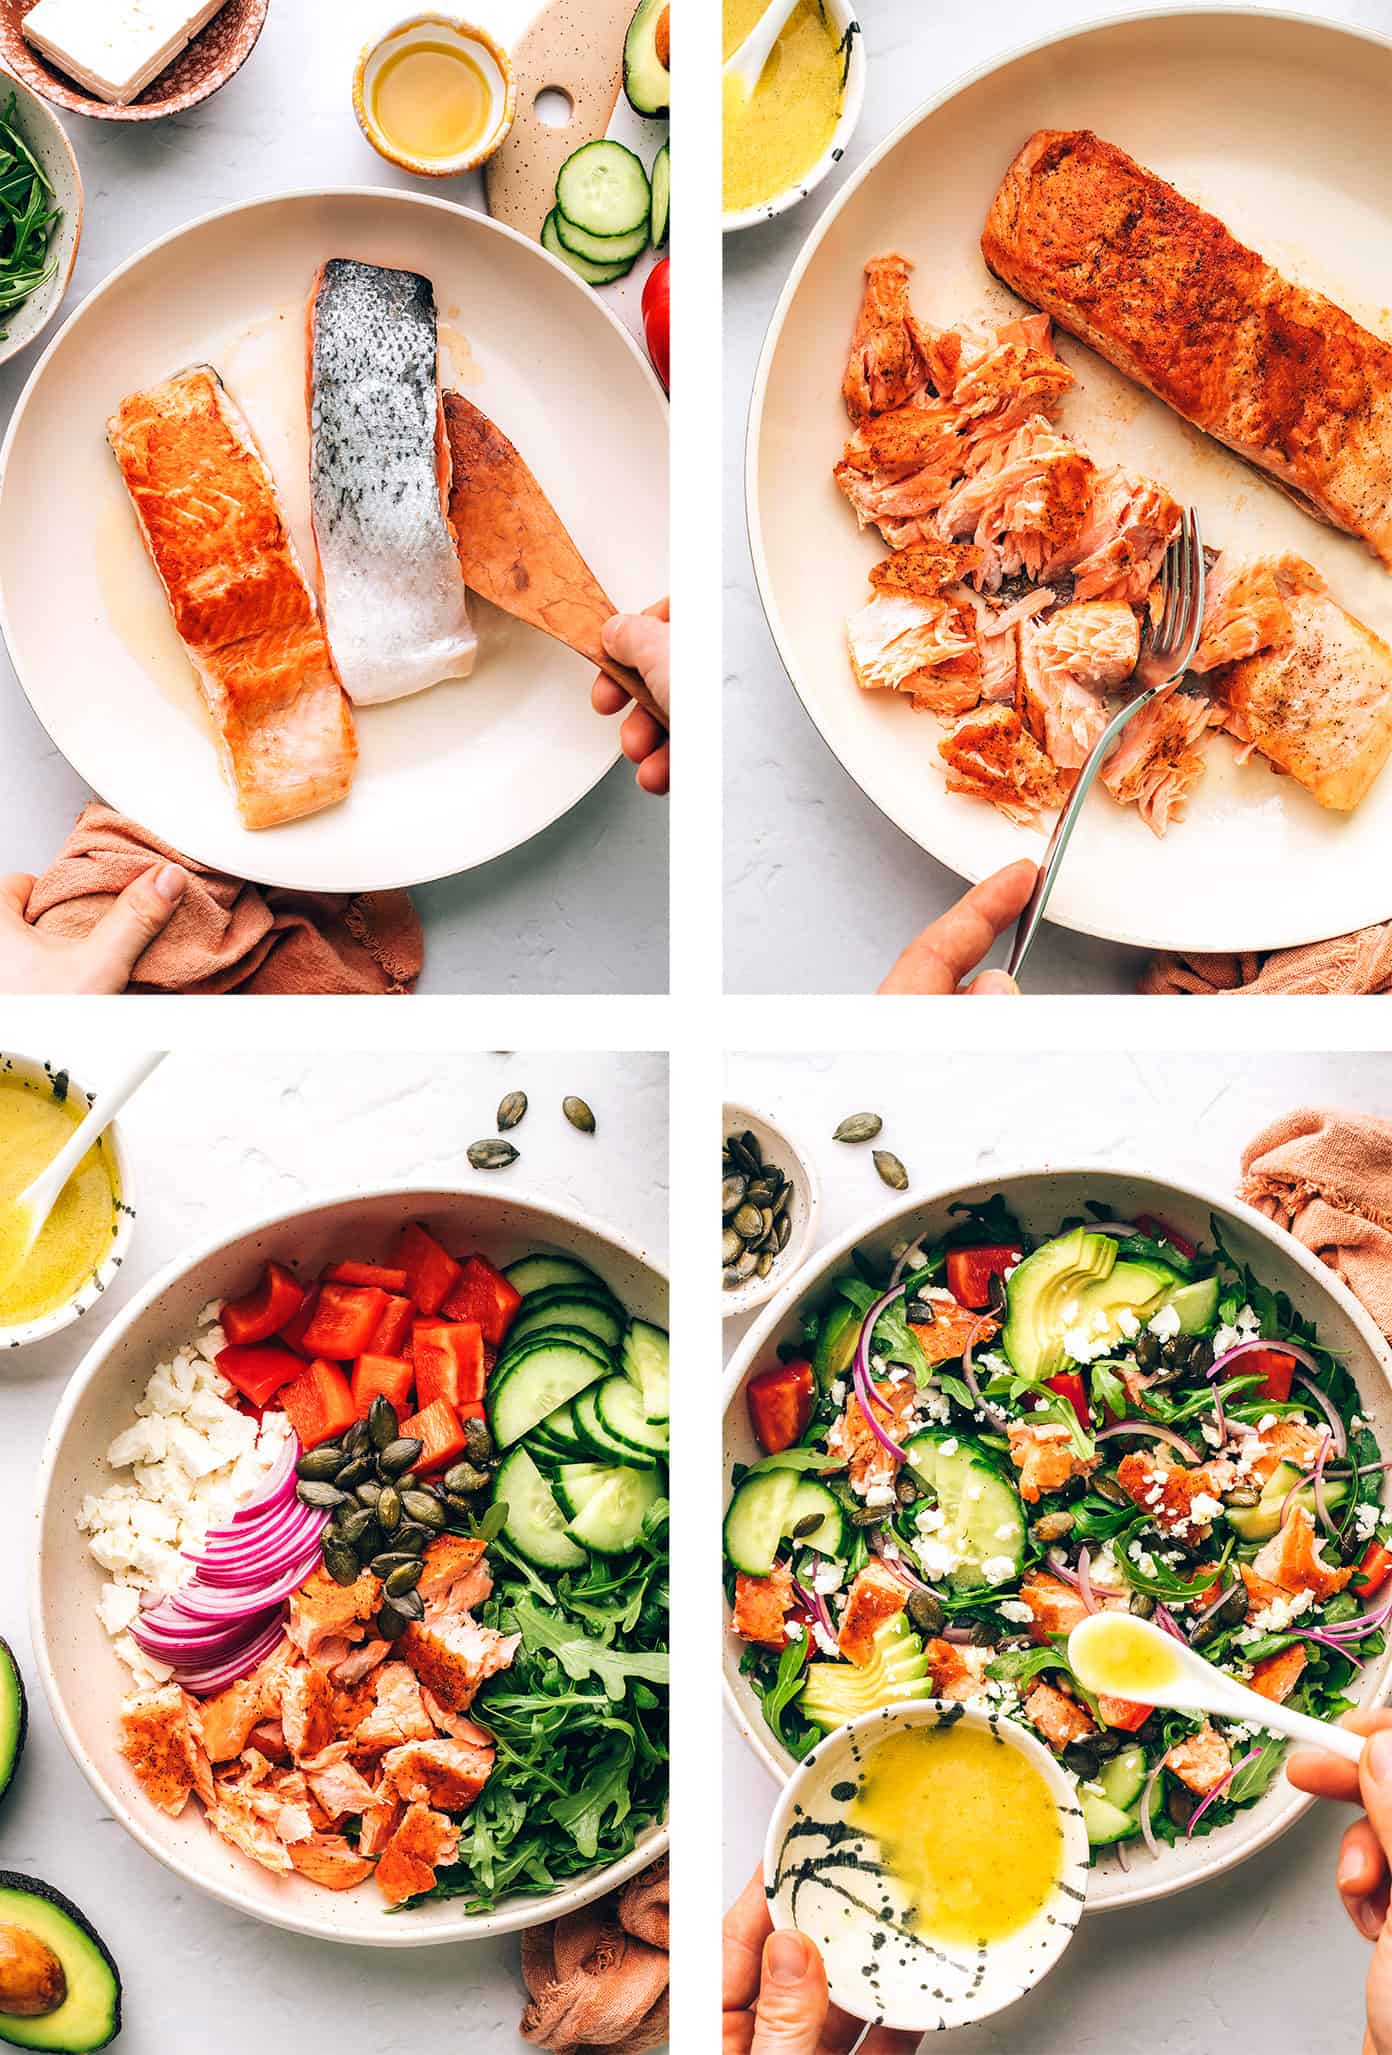 https://www.gimmesomeoven.com/wp-content/uploads/2019/08/Greek-Salmon-Salad-Bowls-Collage.jpg